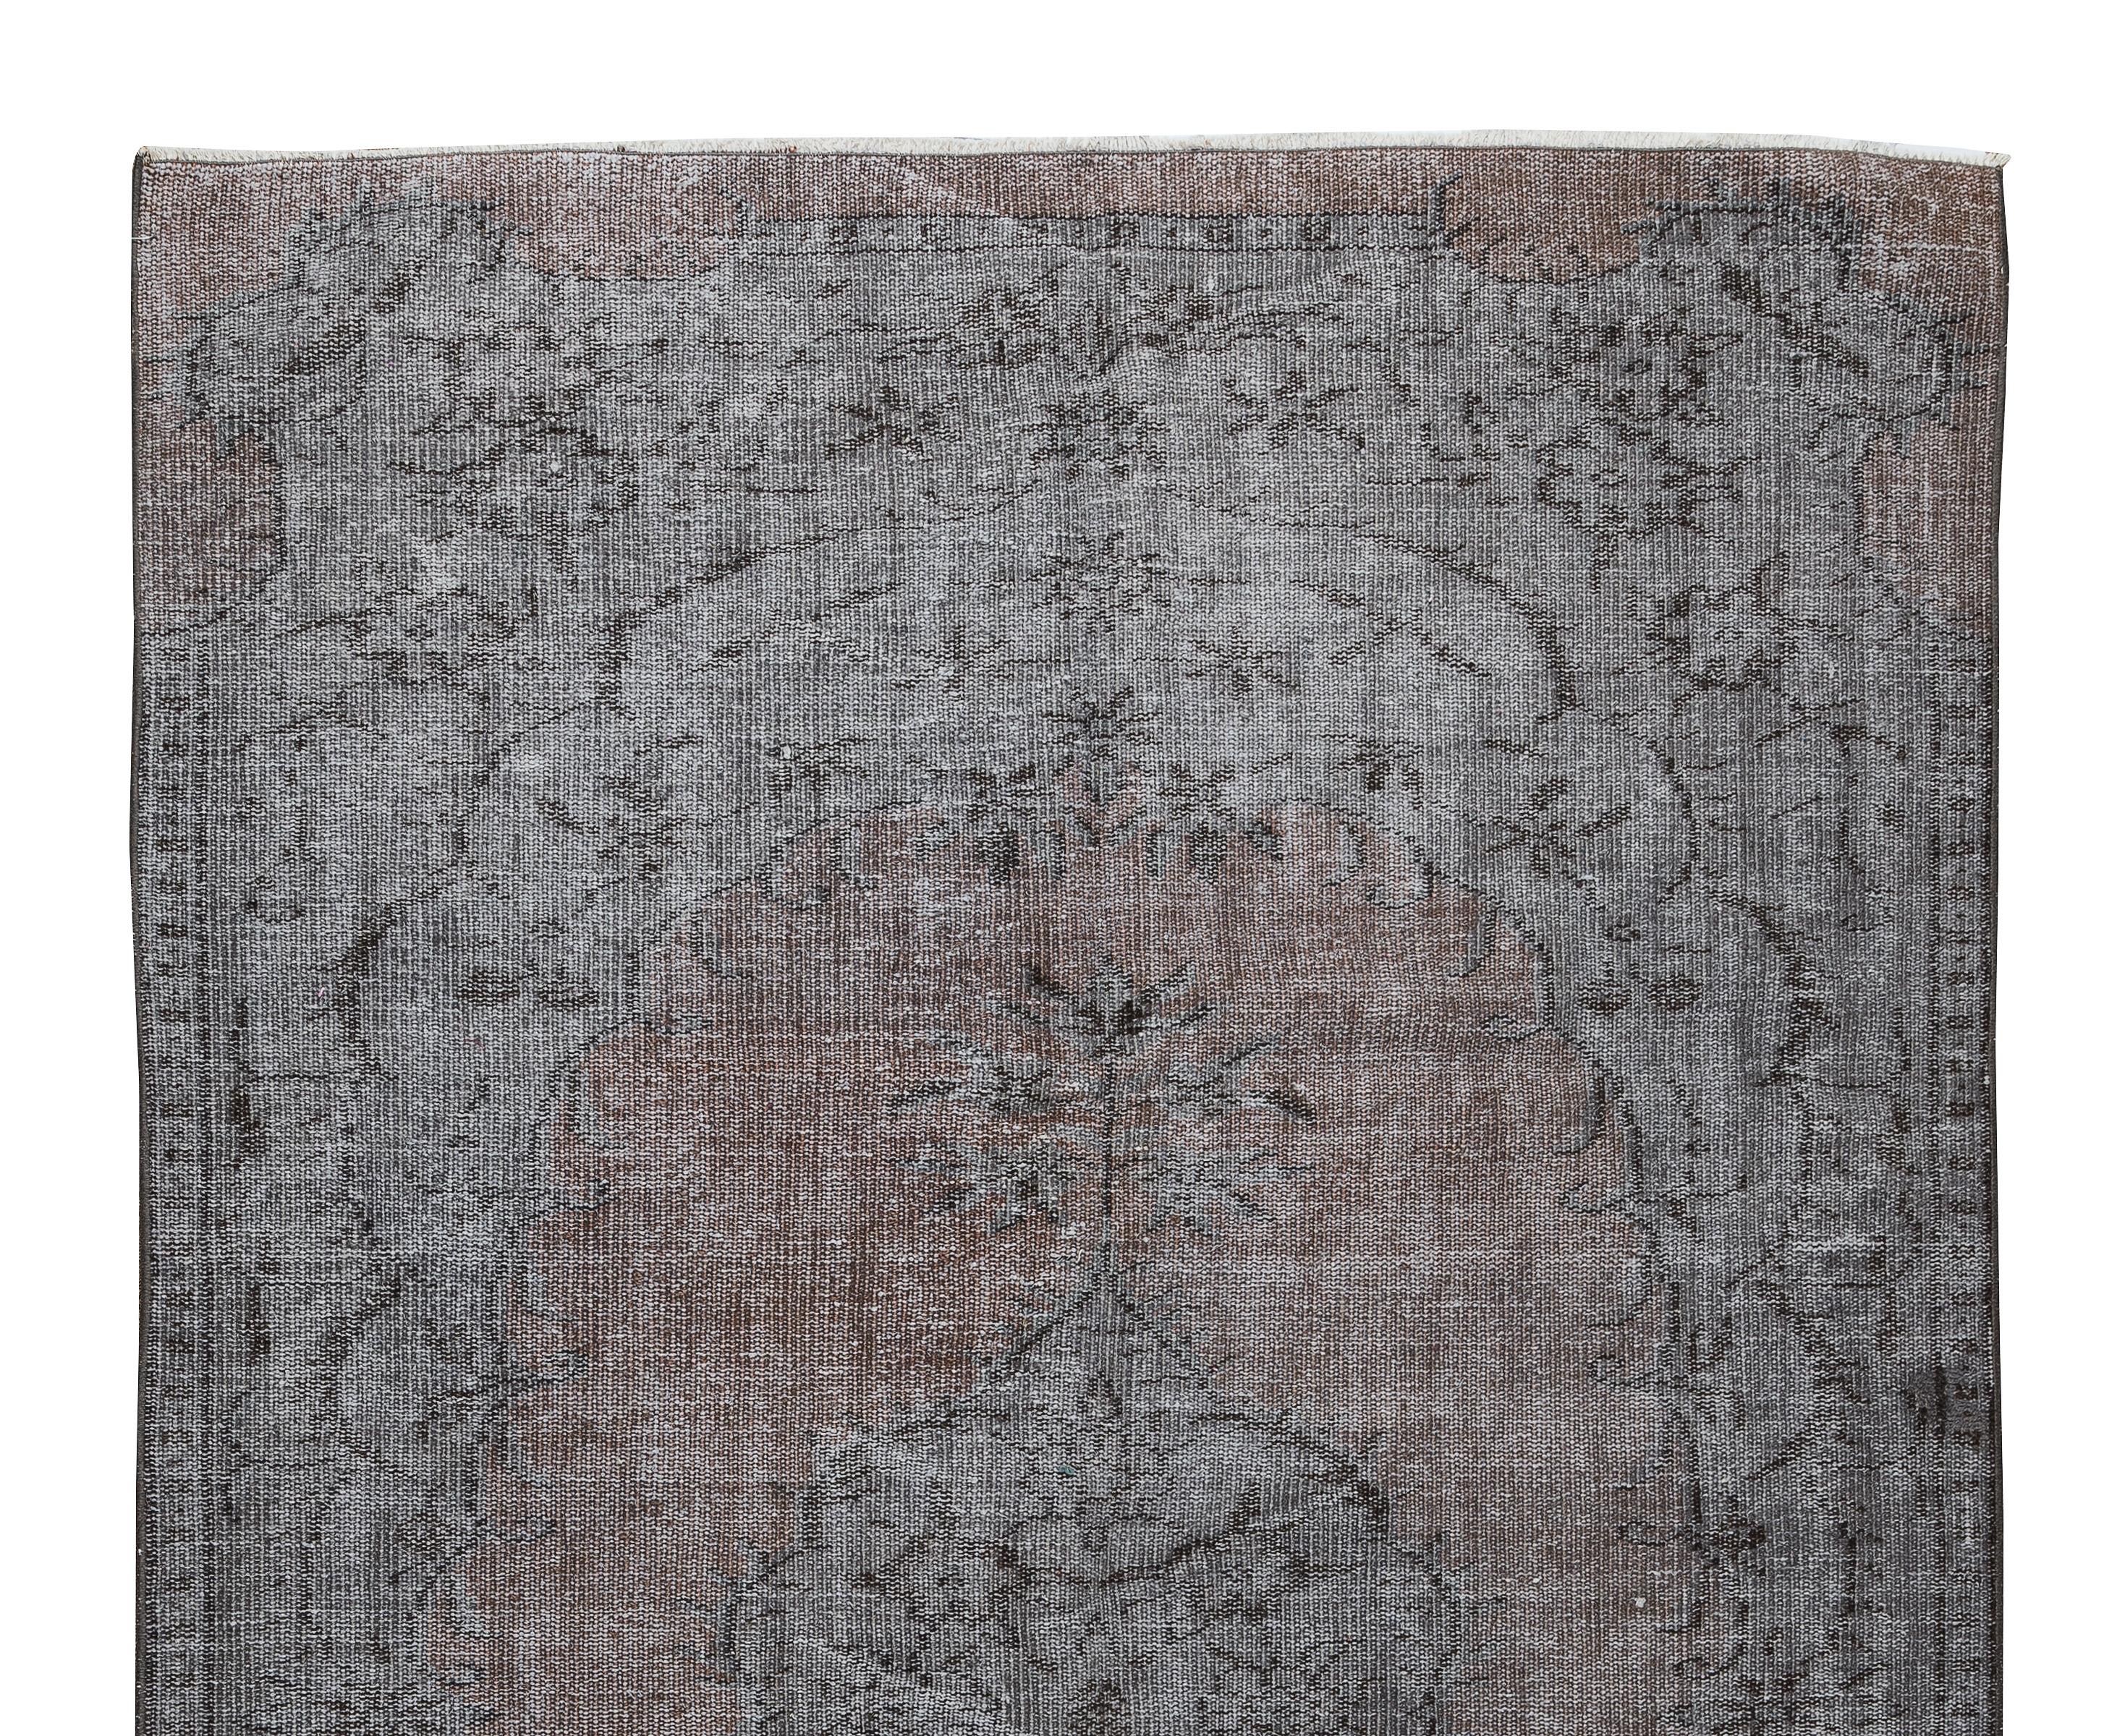 20th Century 5.2x8.4 Ft Handmade Turkish Rug in Gray & Brown. Modern Medallion Design Carpet For Sale